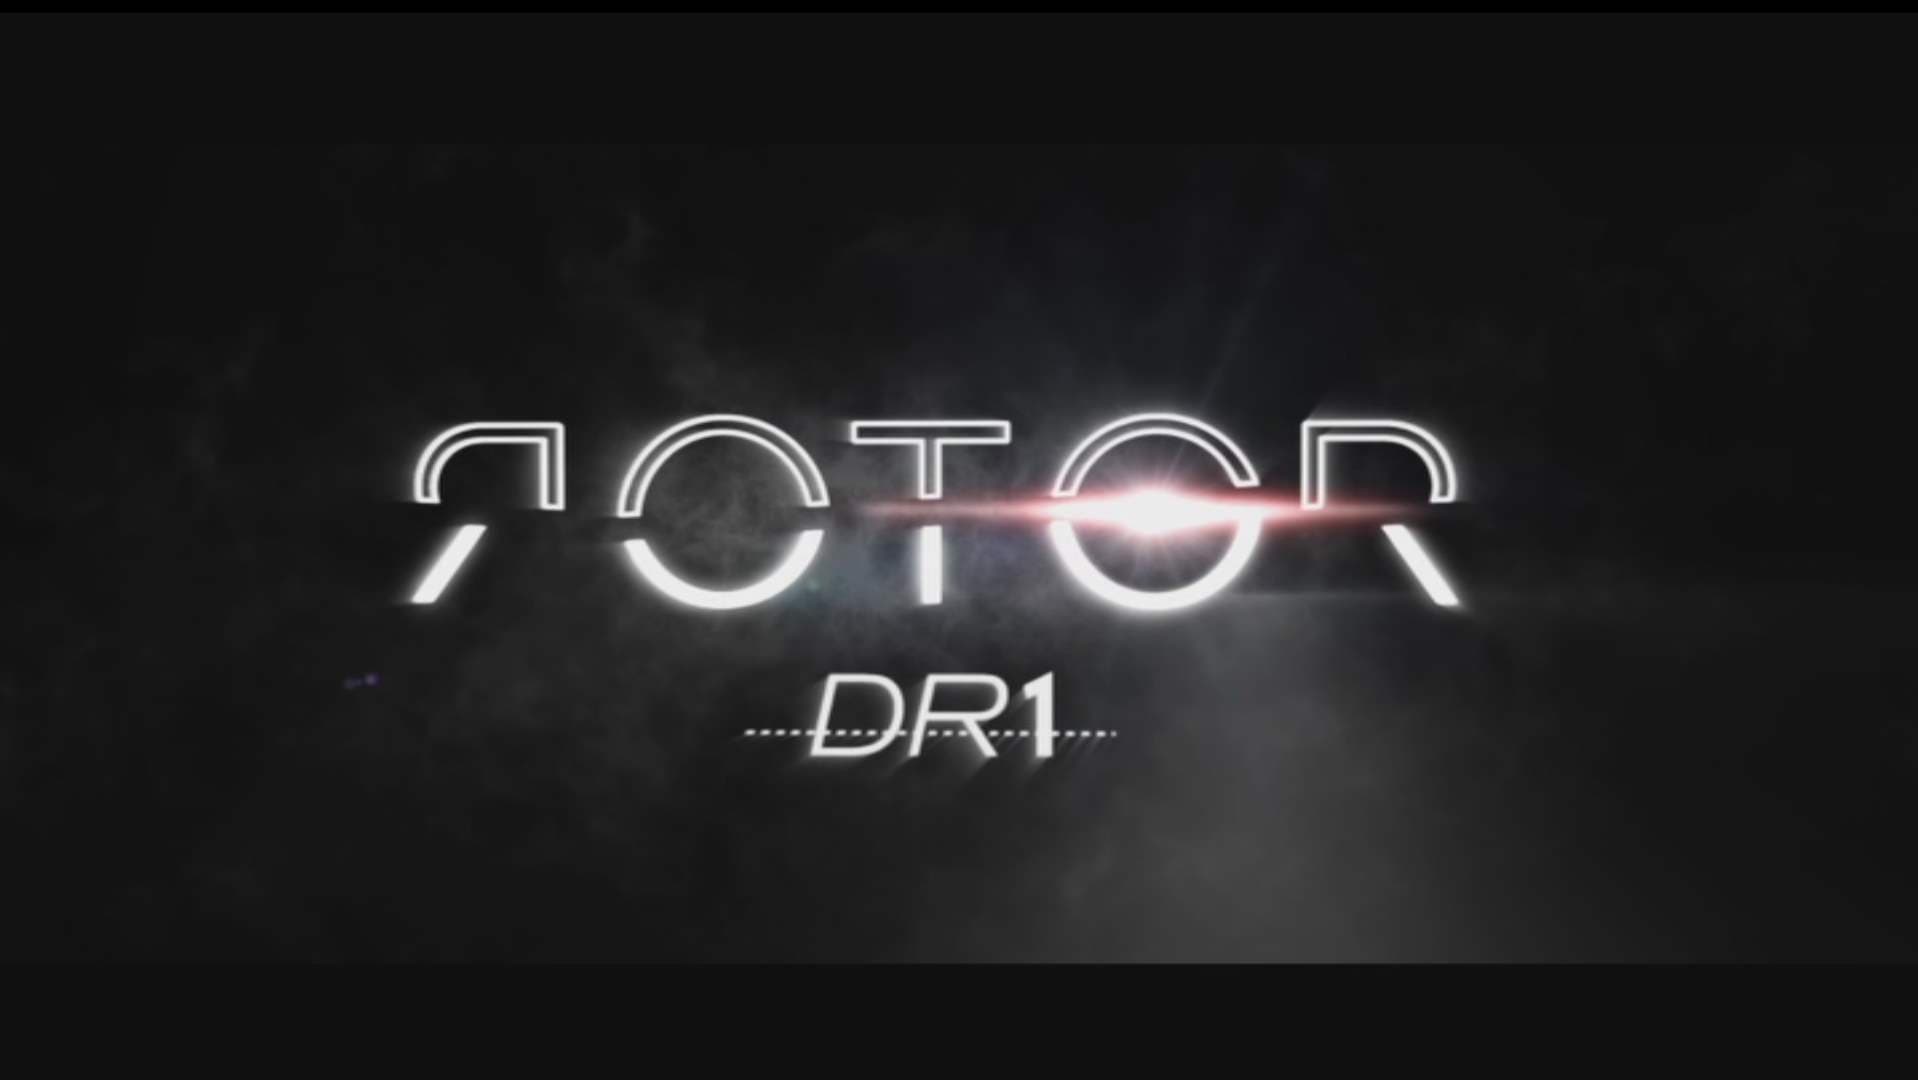 Rotor DR1 2015 123movies